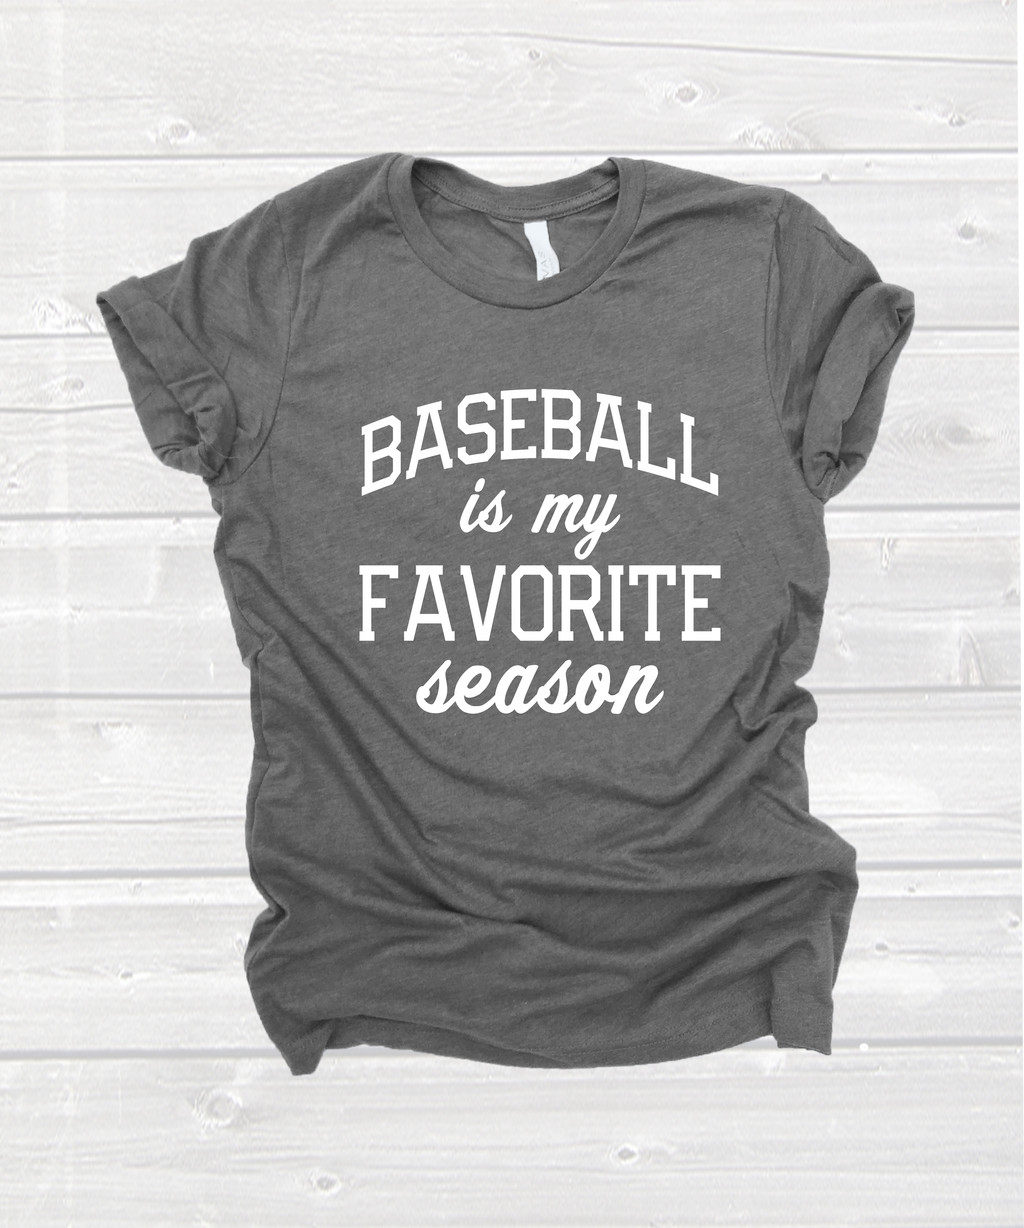 "baseball is my favorite season" tee in heather grey